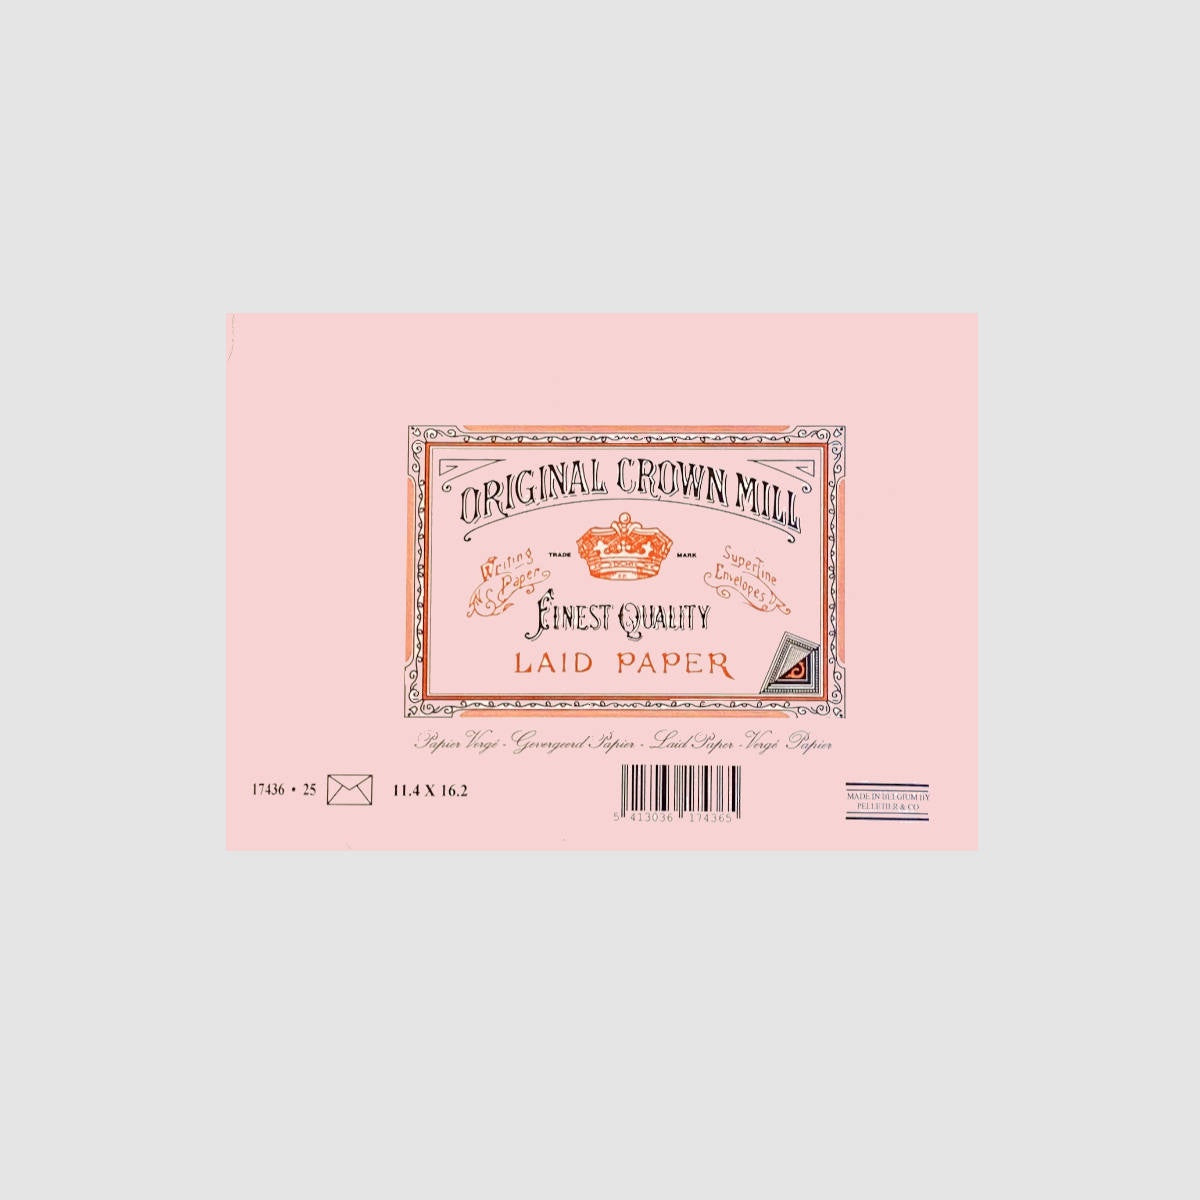 Laid Paper Envelopes 25 Pack – C6 Pink - Original Crown Mill